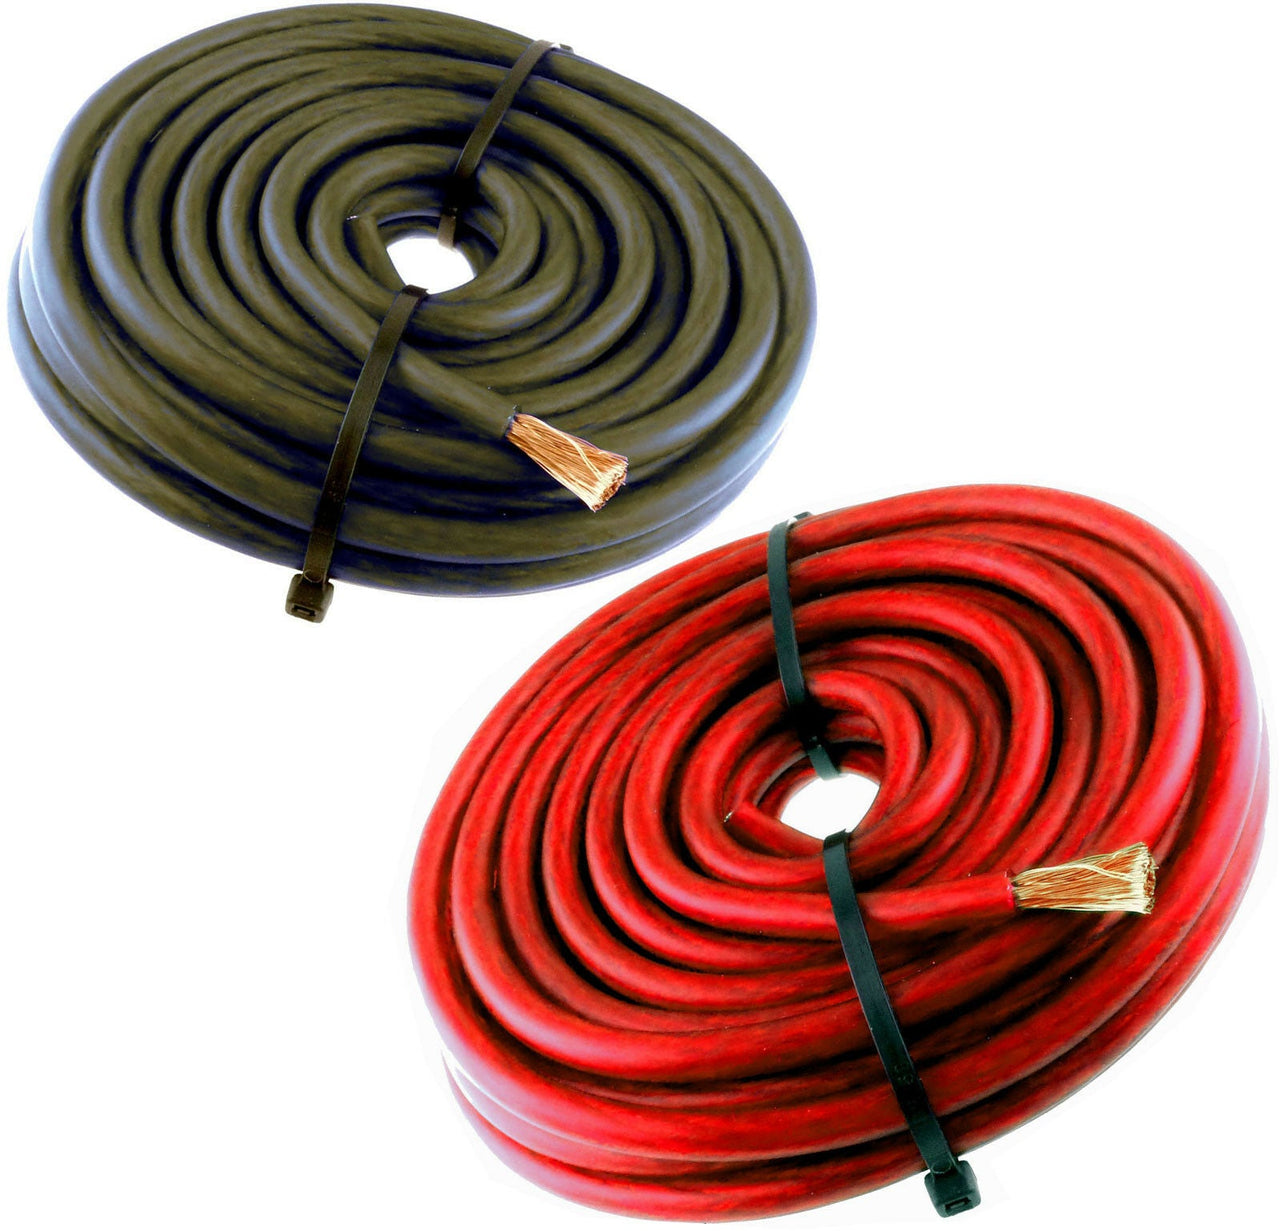 20FT 8 Gauge Primary Speaker Wire Amp Power Ground Car Audio Marine Pro Audio 10' Red + 10' Black